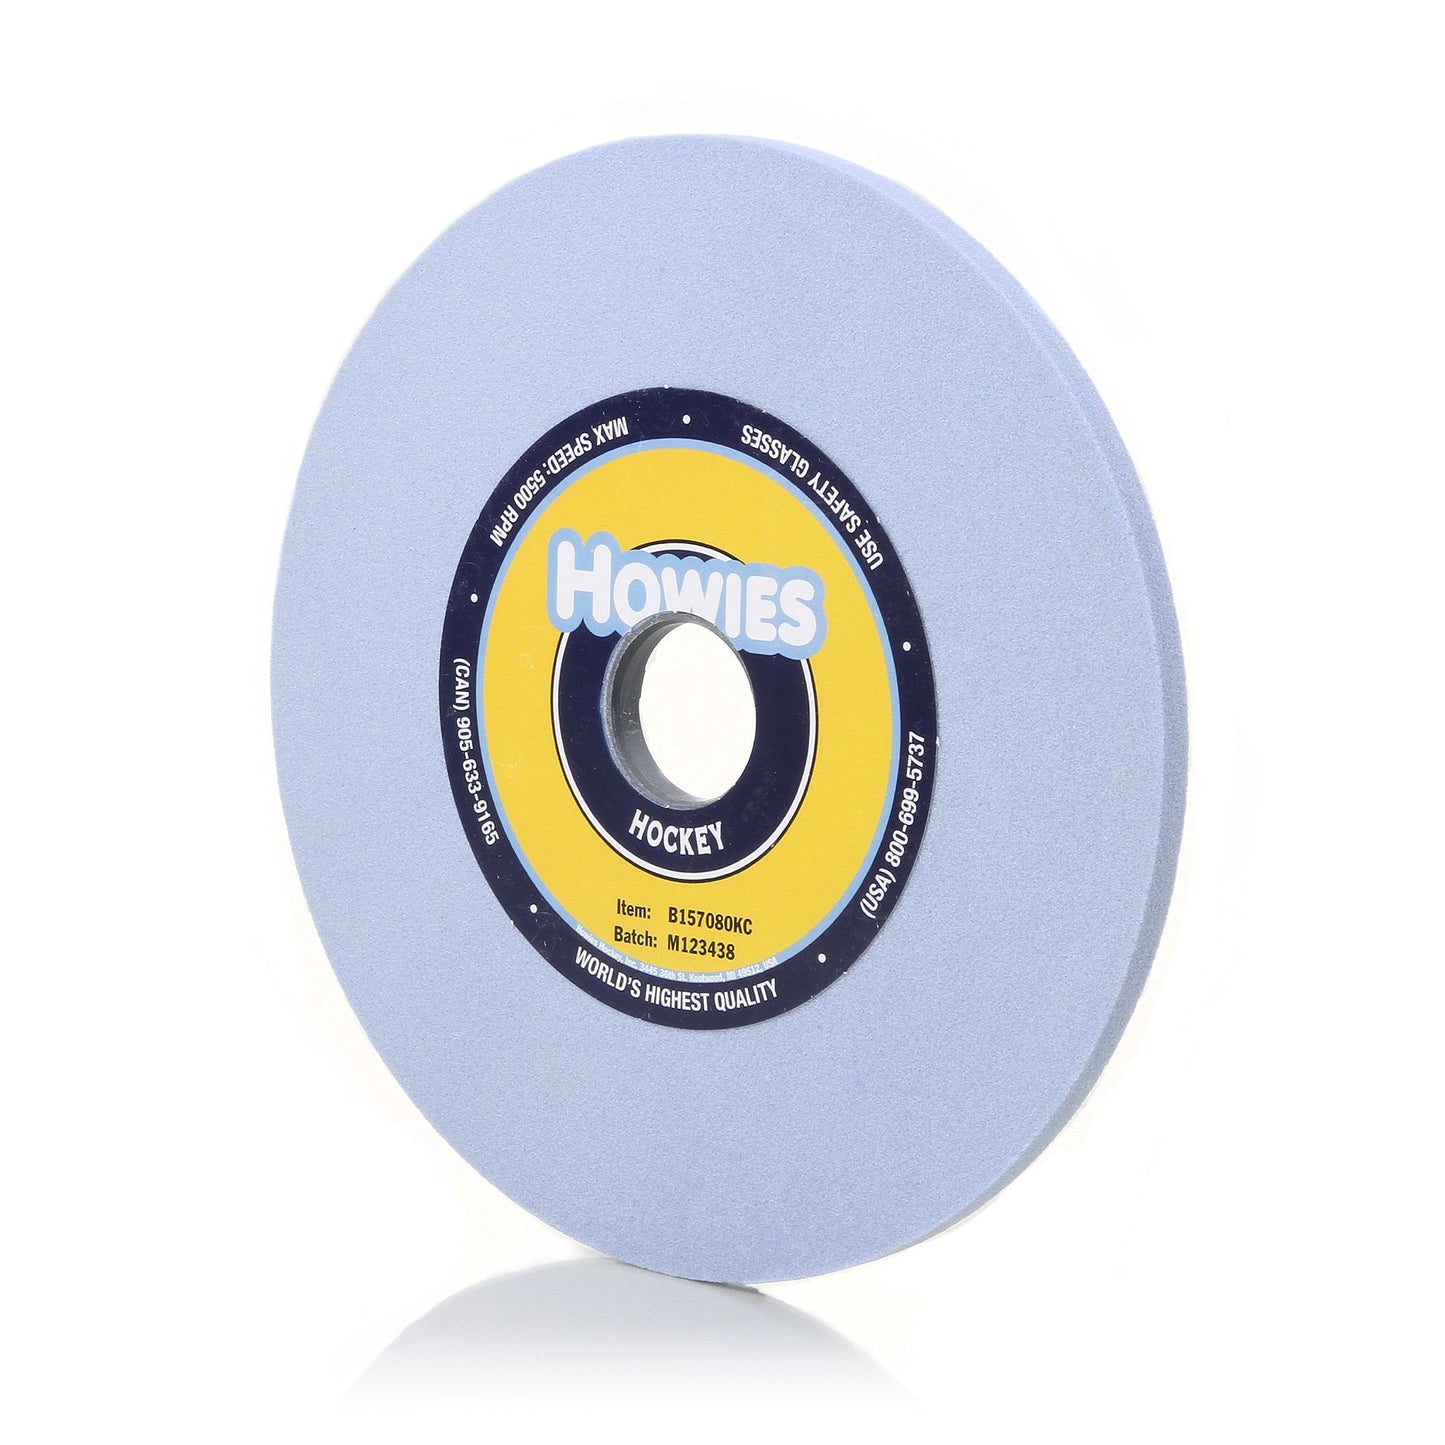 Howies skate sharpening wheel 8" Blue Sharpening Wheel